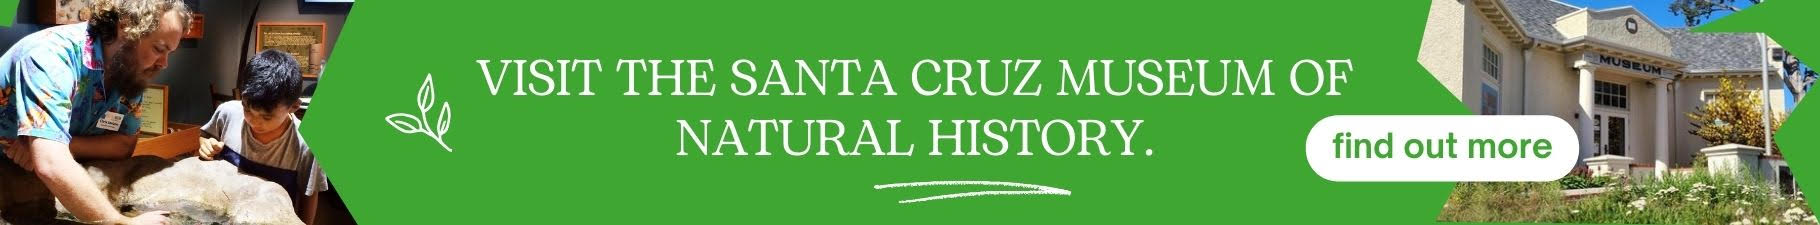 Ad for the Santa Cruz Museum of Natural History